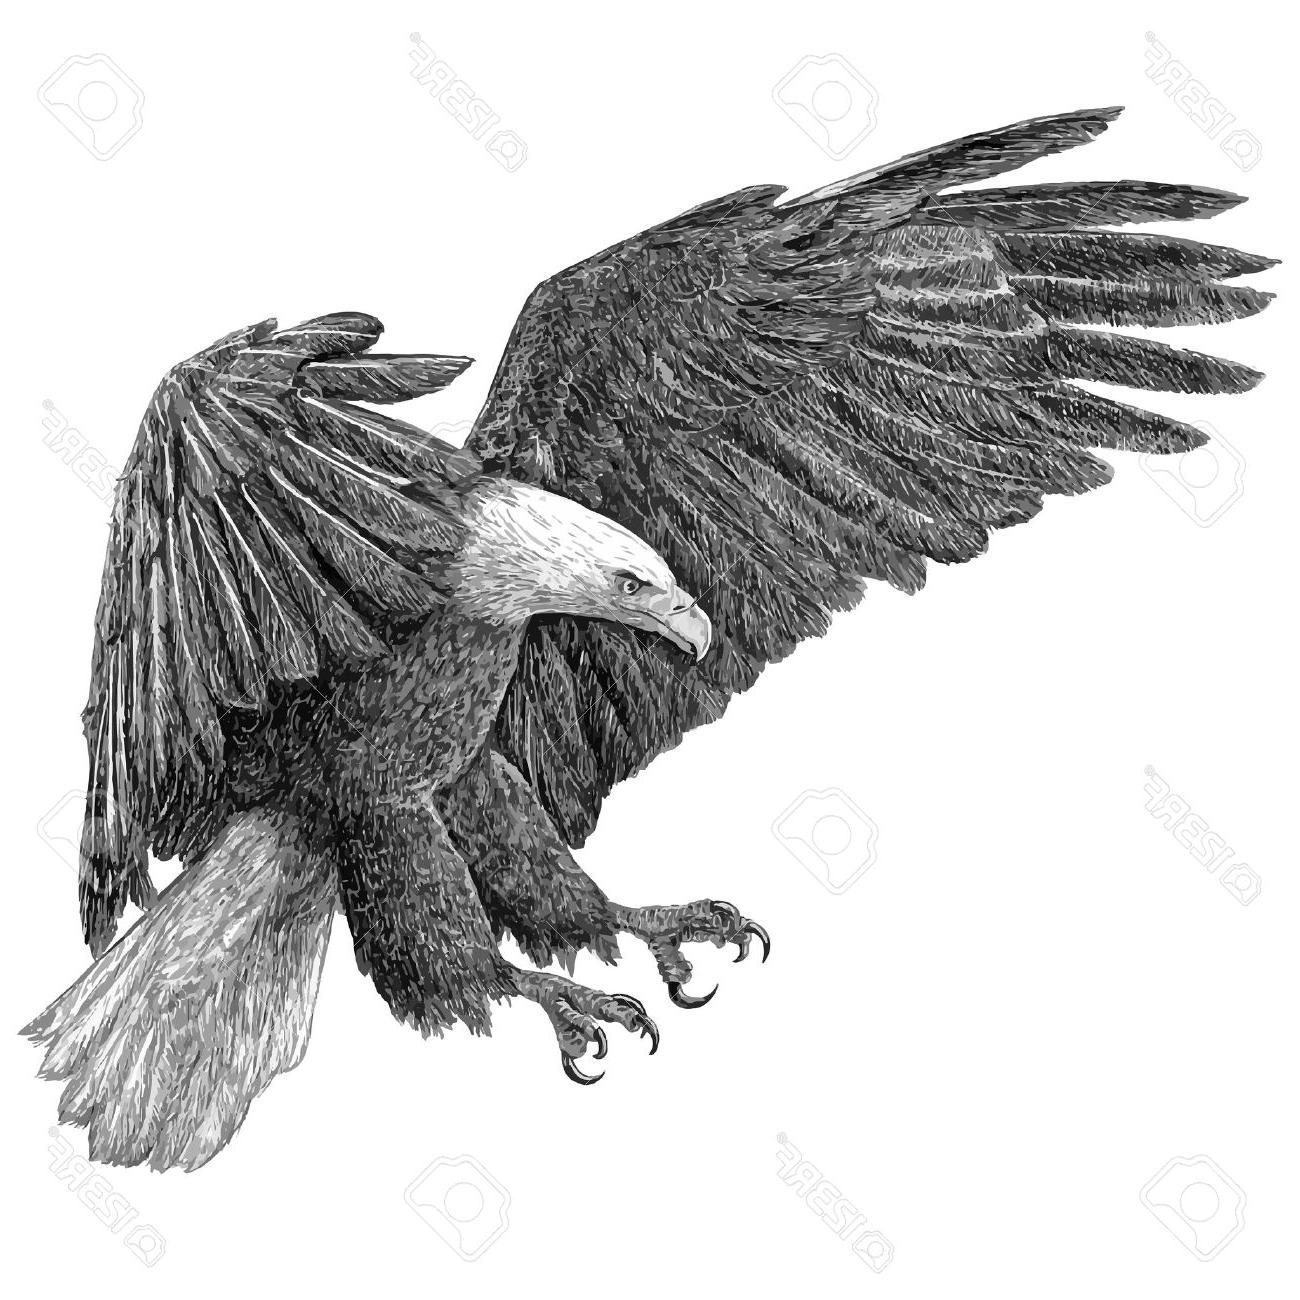 Best american eagle.